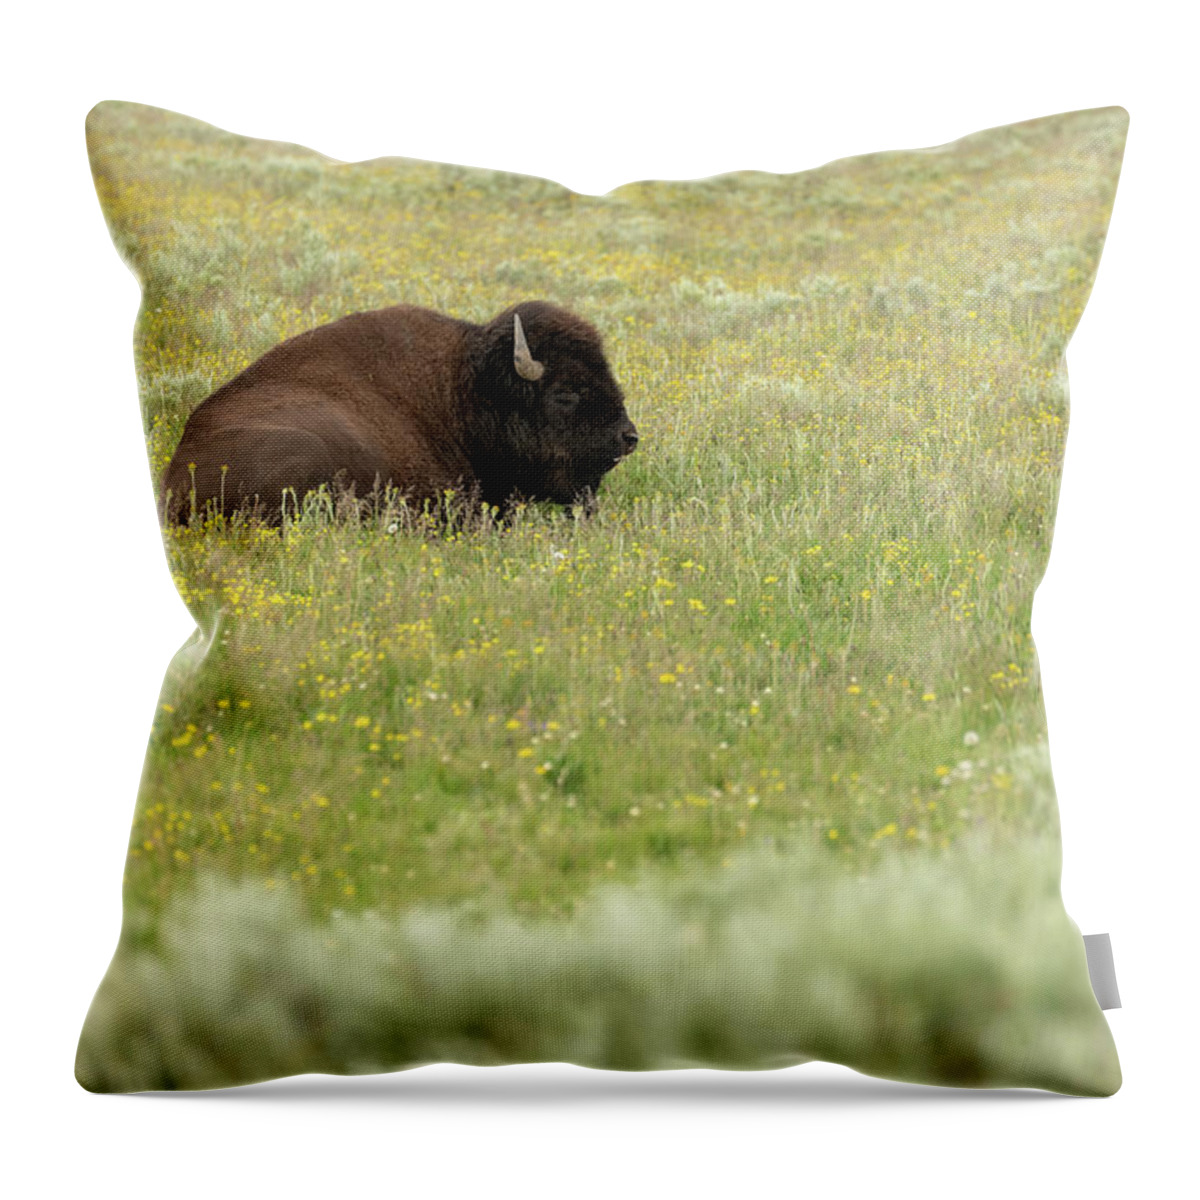 Buffalo Throw Pillow featuring the photograph 2018 Buffalo-2 by Tara Krauss